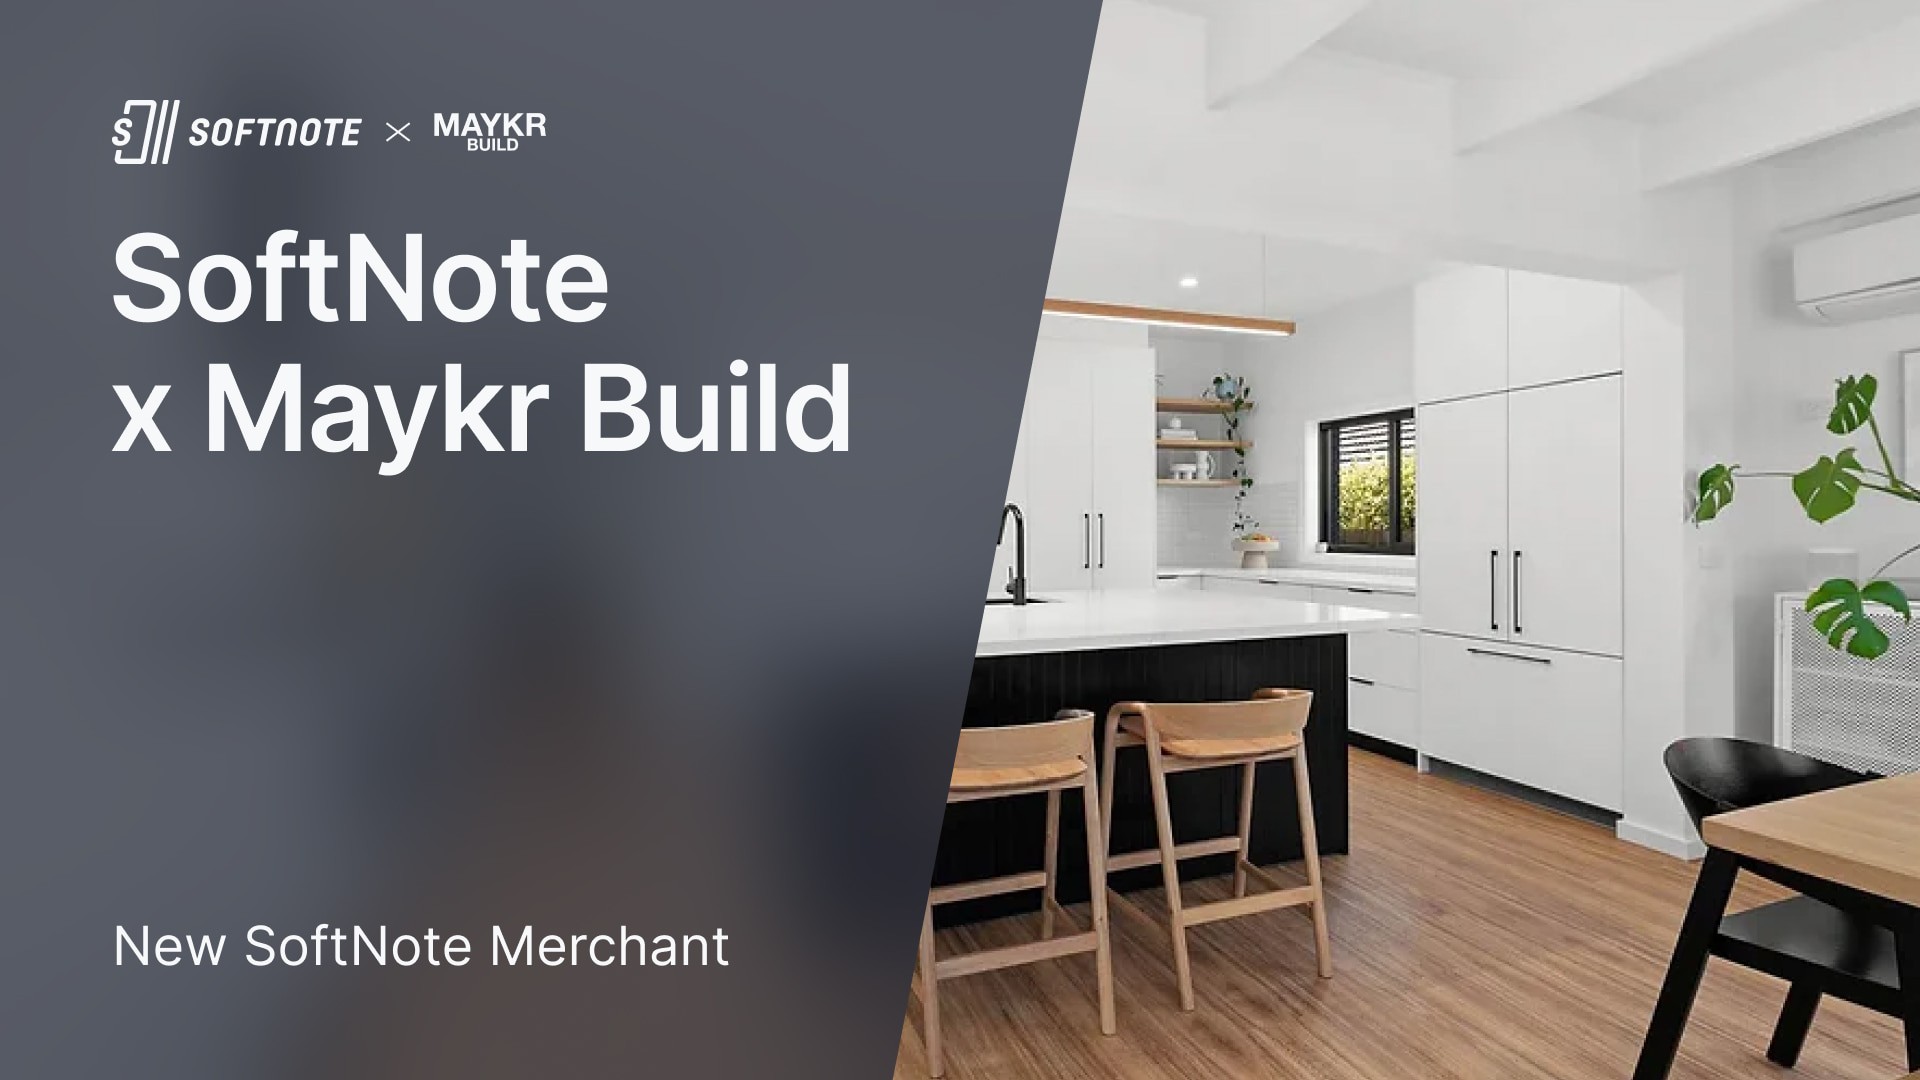 Meet MAYKR Build – The Latest SoftNote Merchant